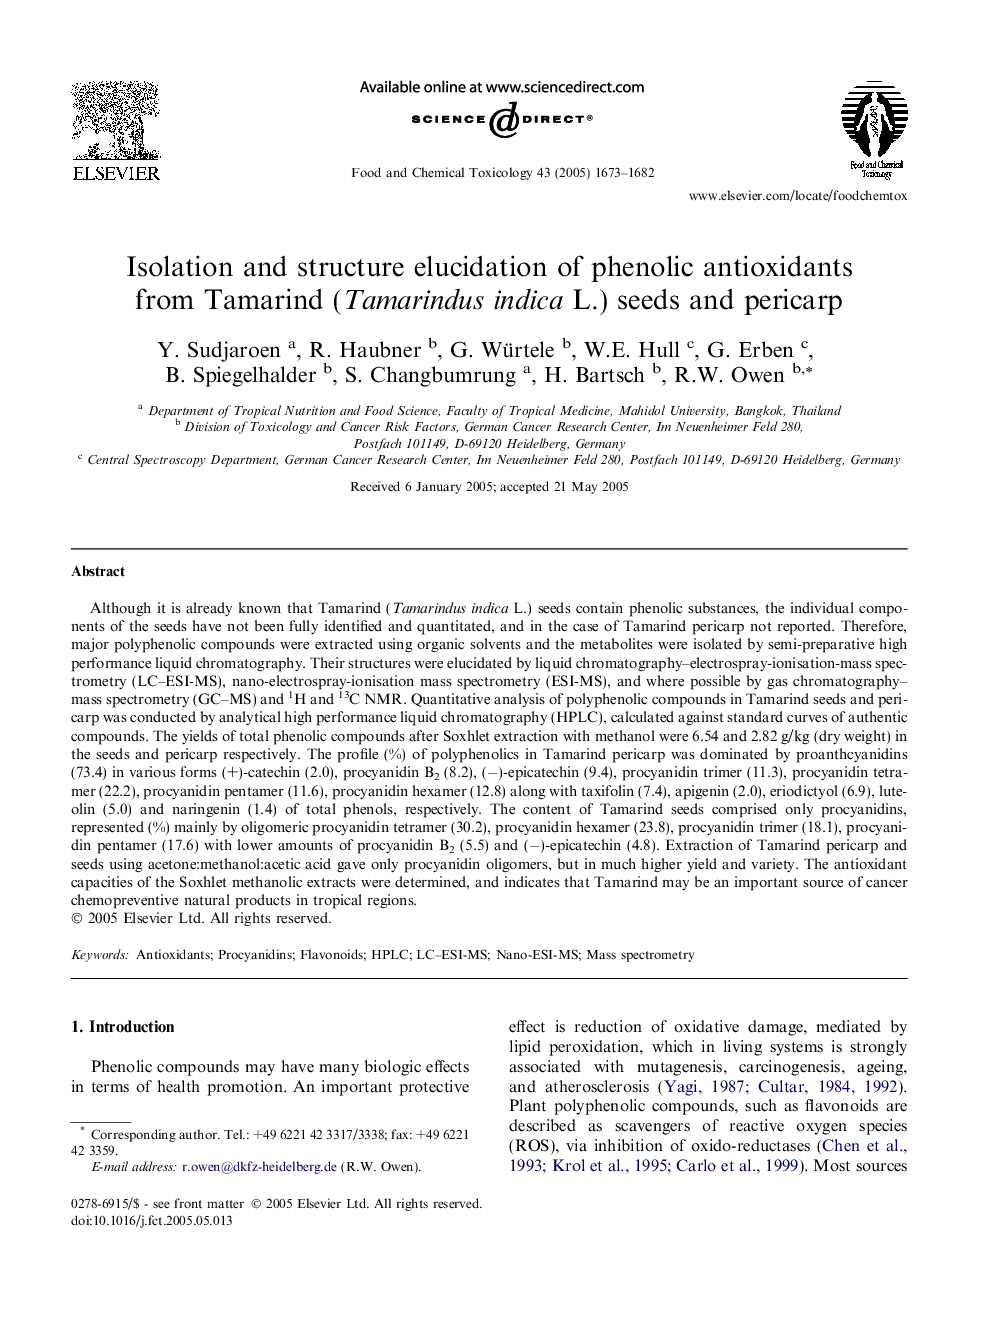 Isolation and structure elucidation of phenolic antioxidants from Tamarind (Tamarindus indica L.) seeds and pericarp